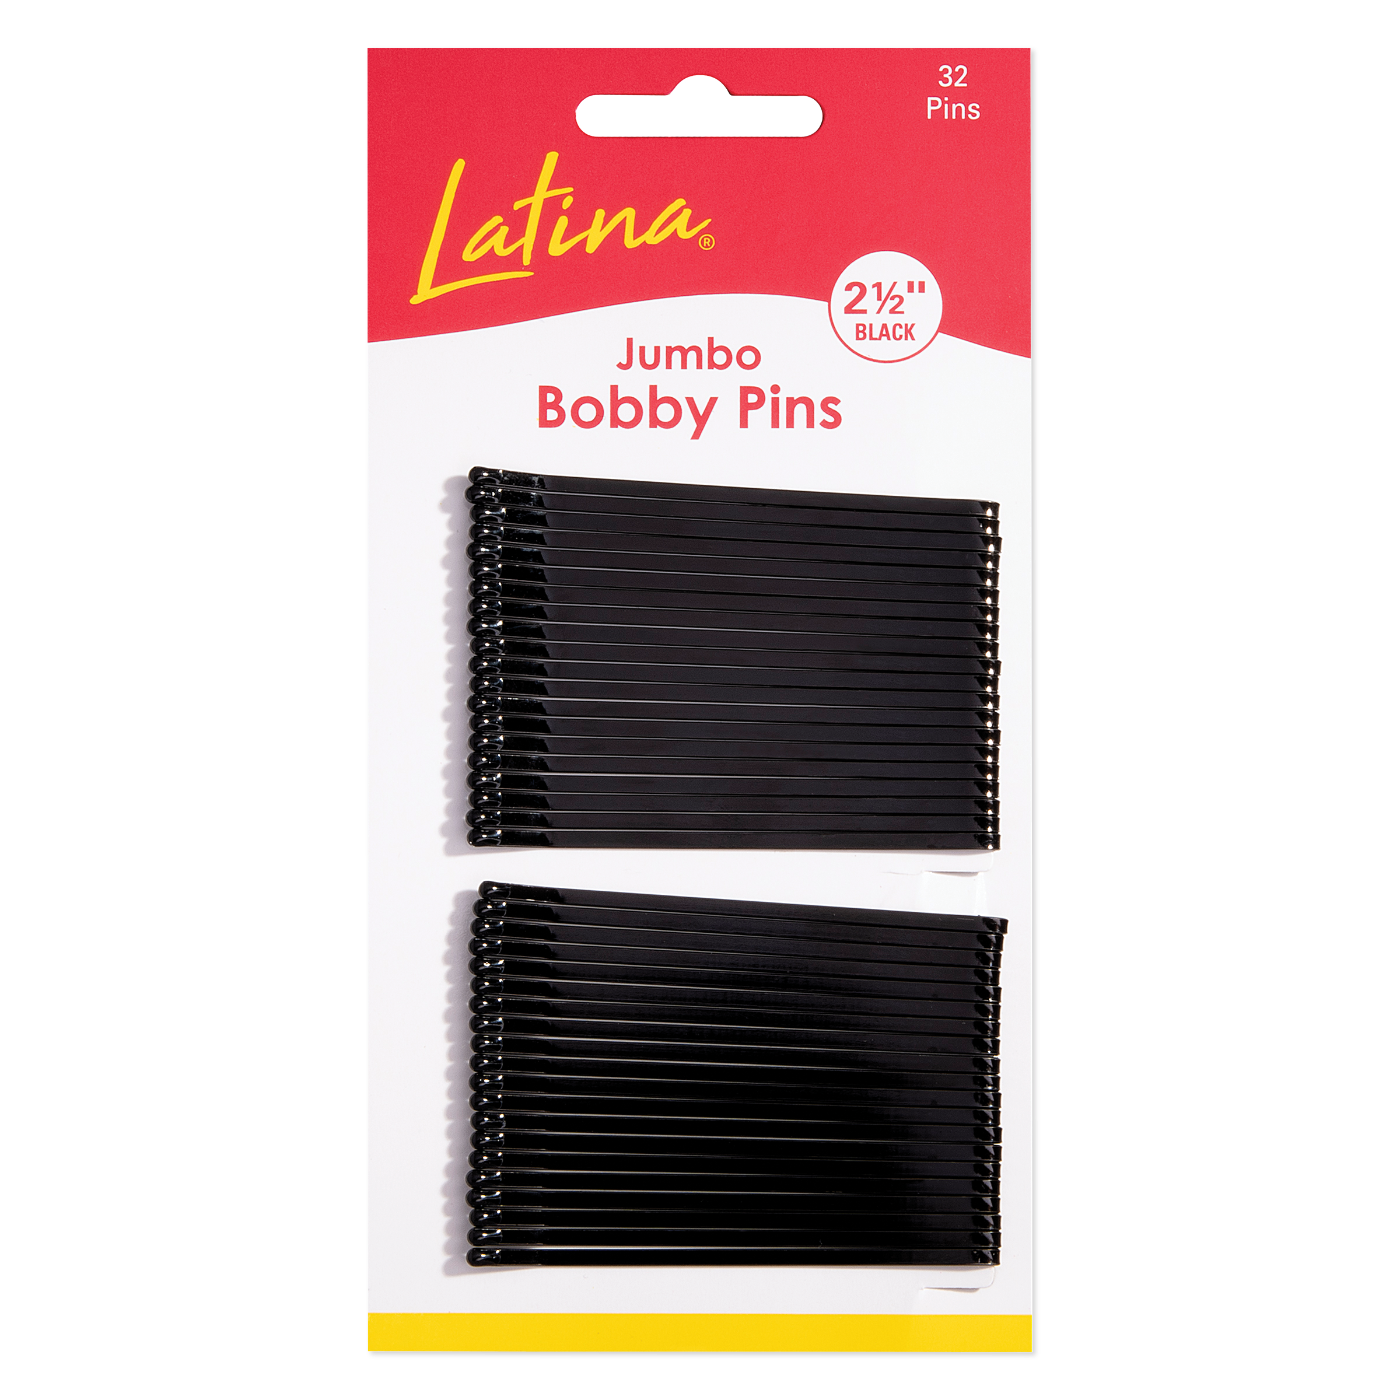 Bobby Pins, Black, Extra-long - 2-1/2''